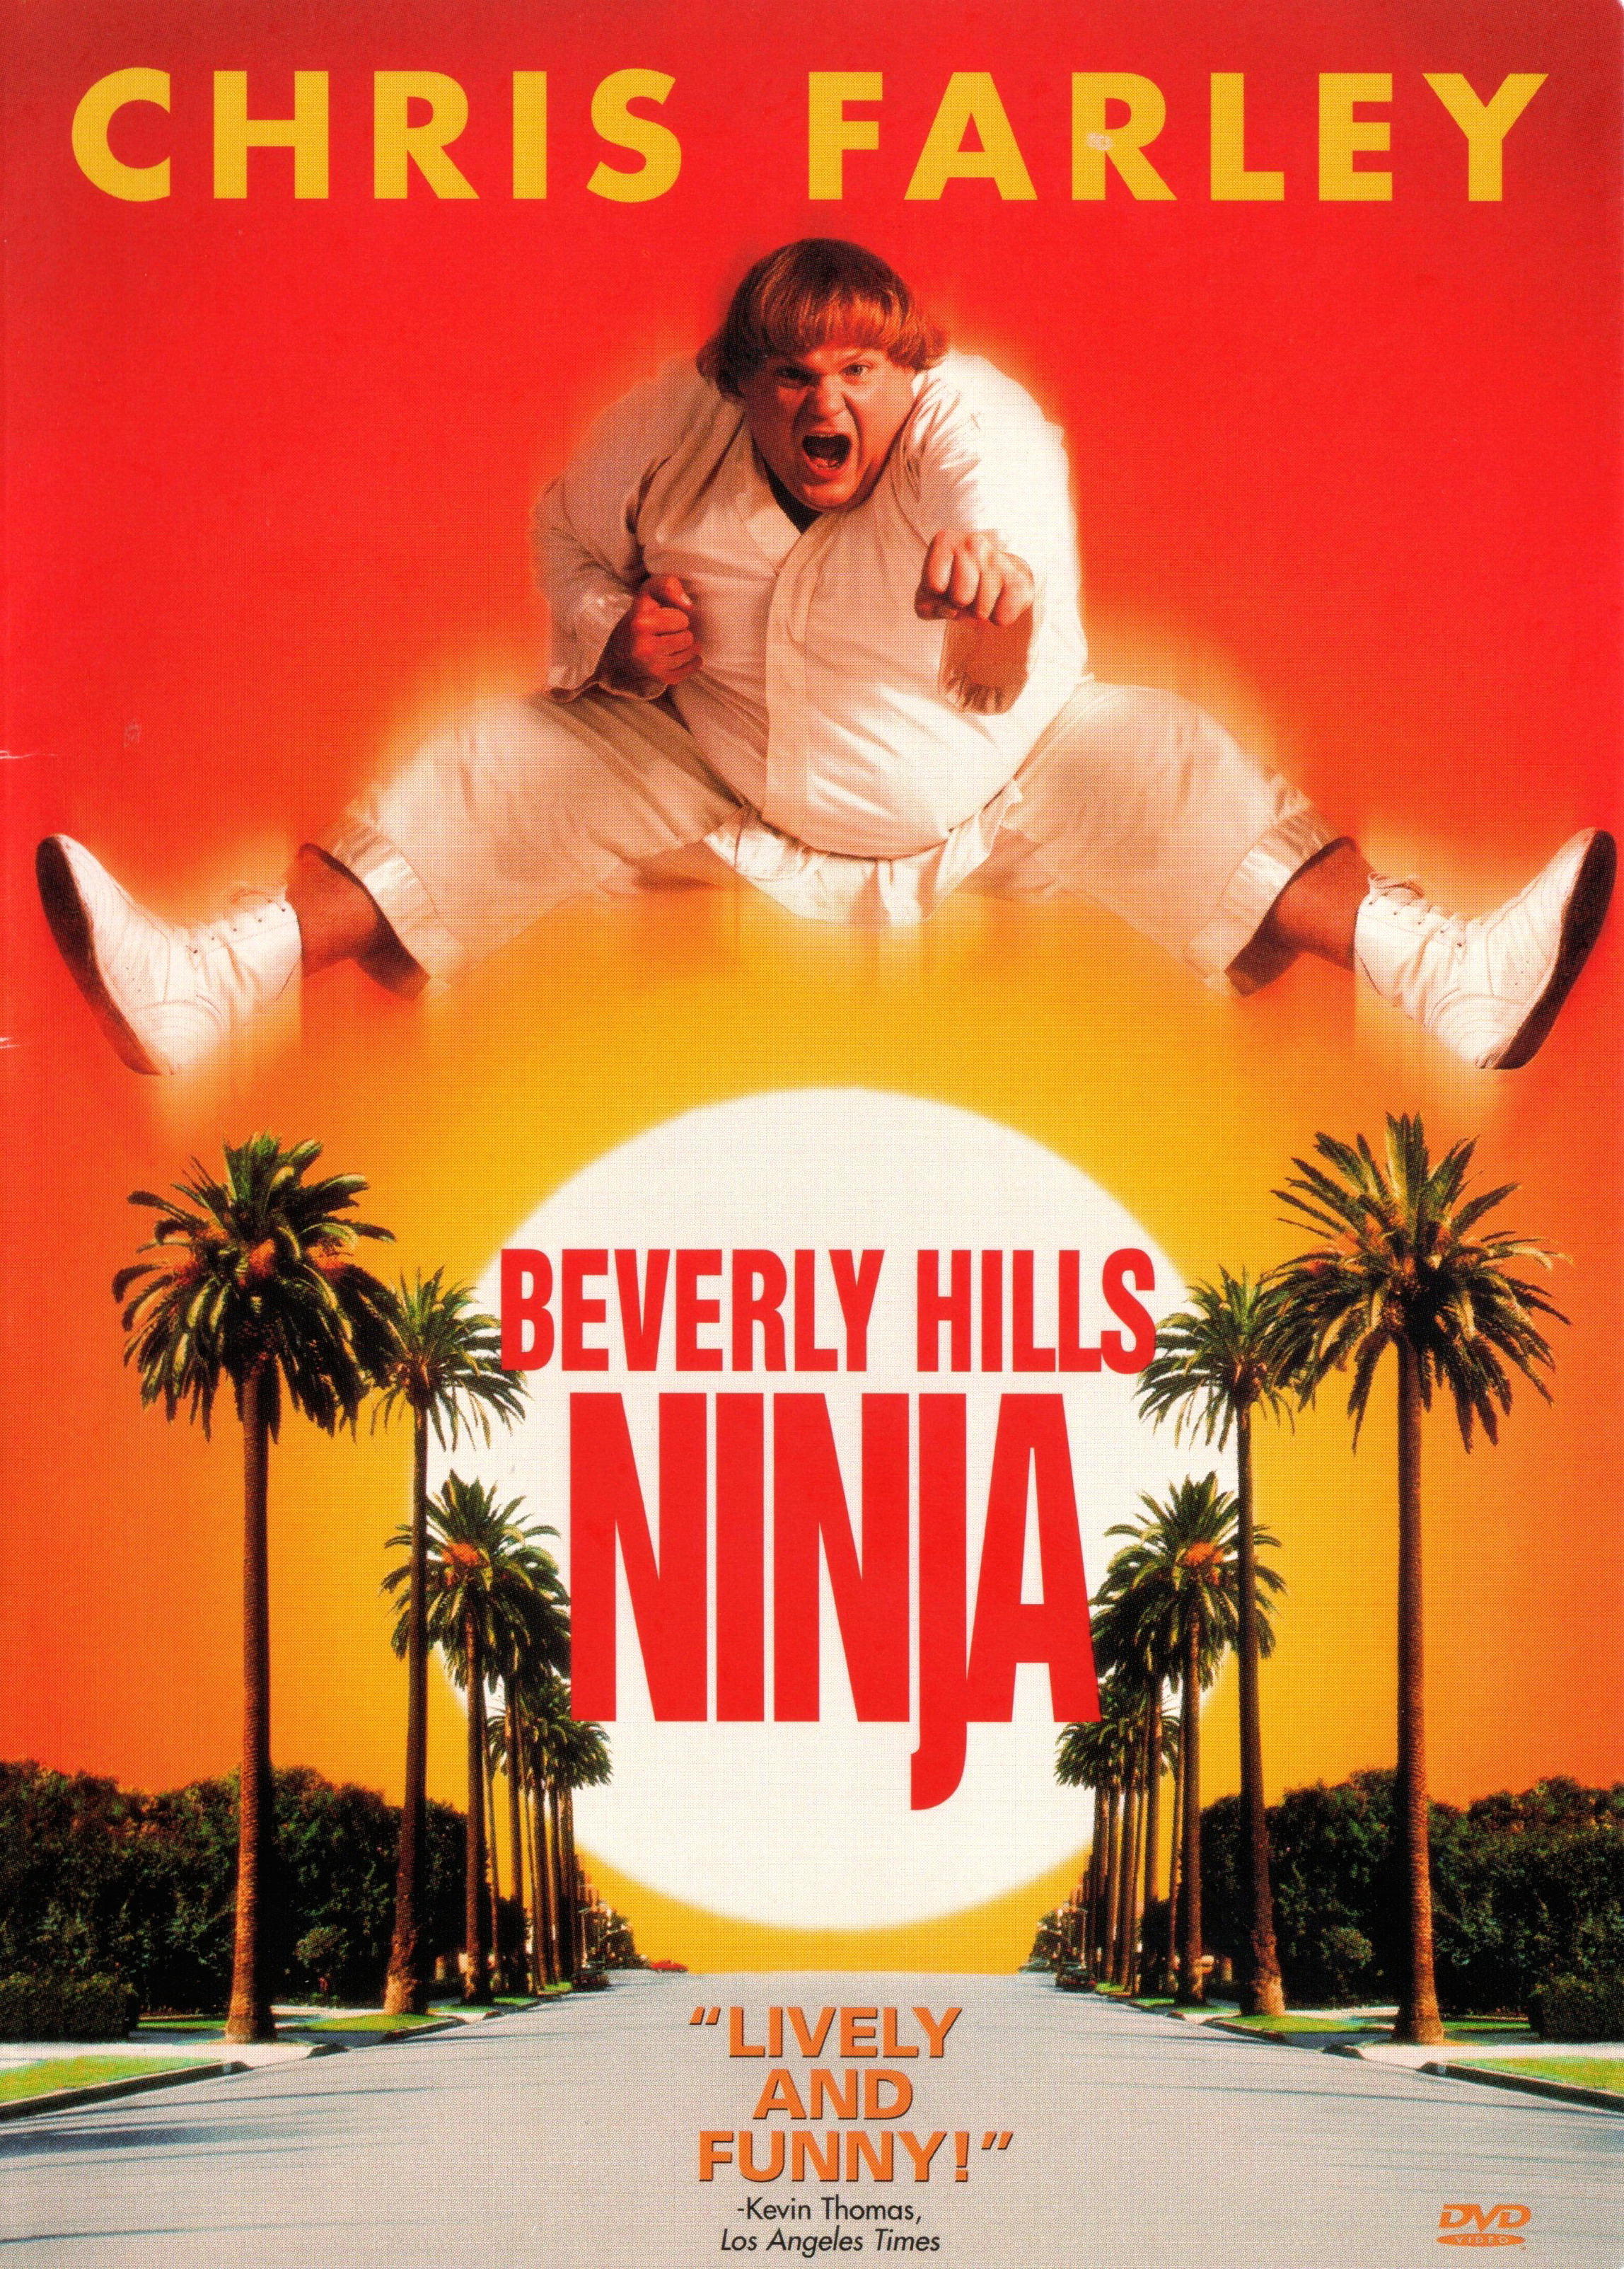 1997-Beverly Hills Ninja.jpg